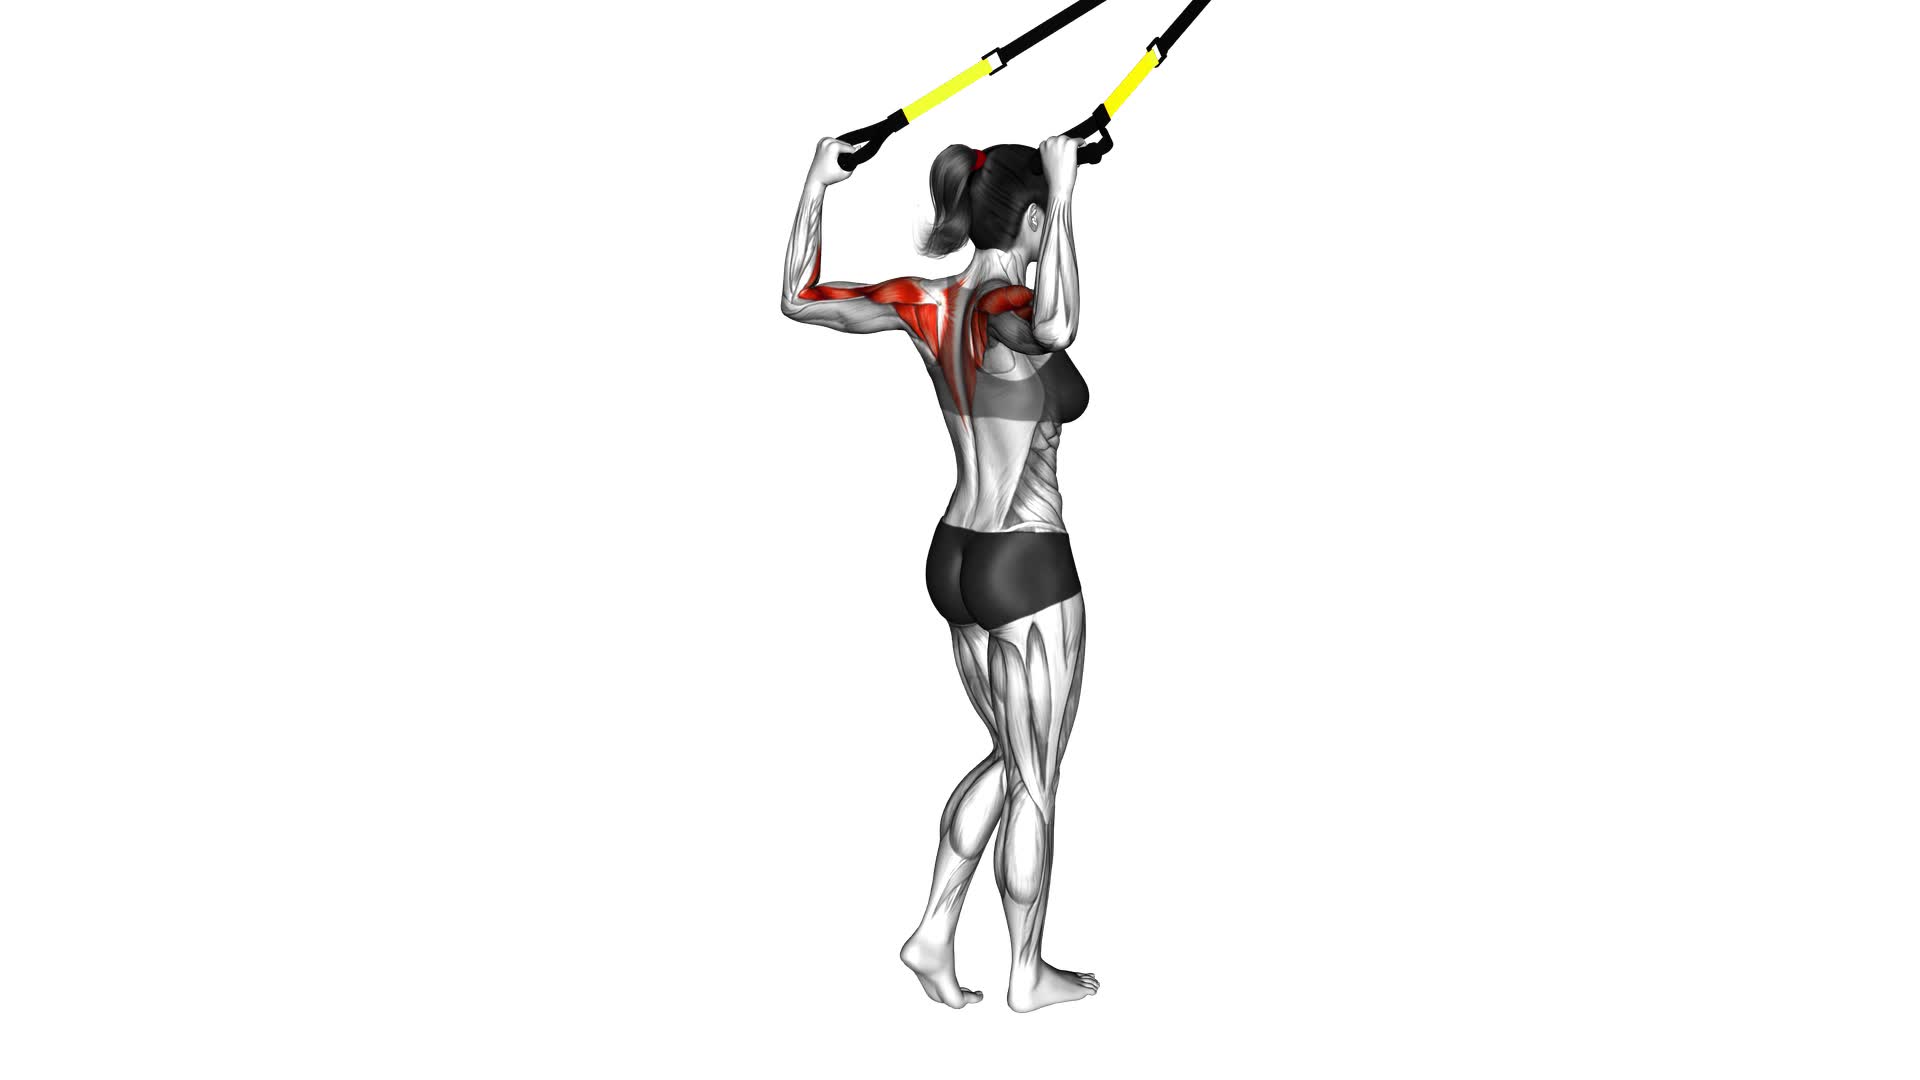 Suspender Face Pull (female) - Video Exercise Guide & Tips